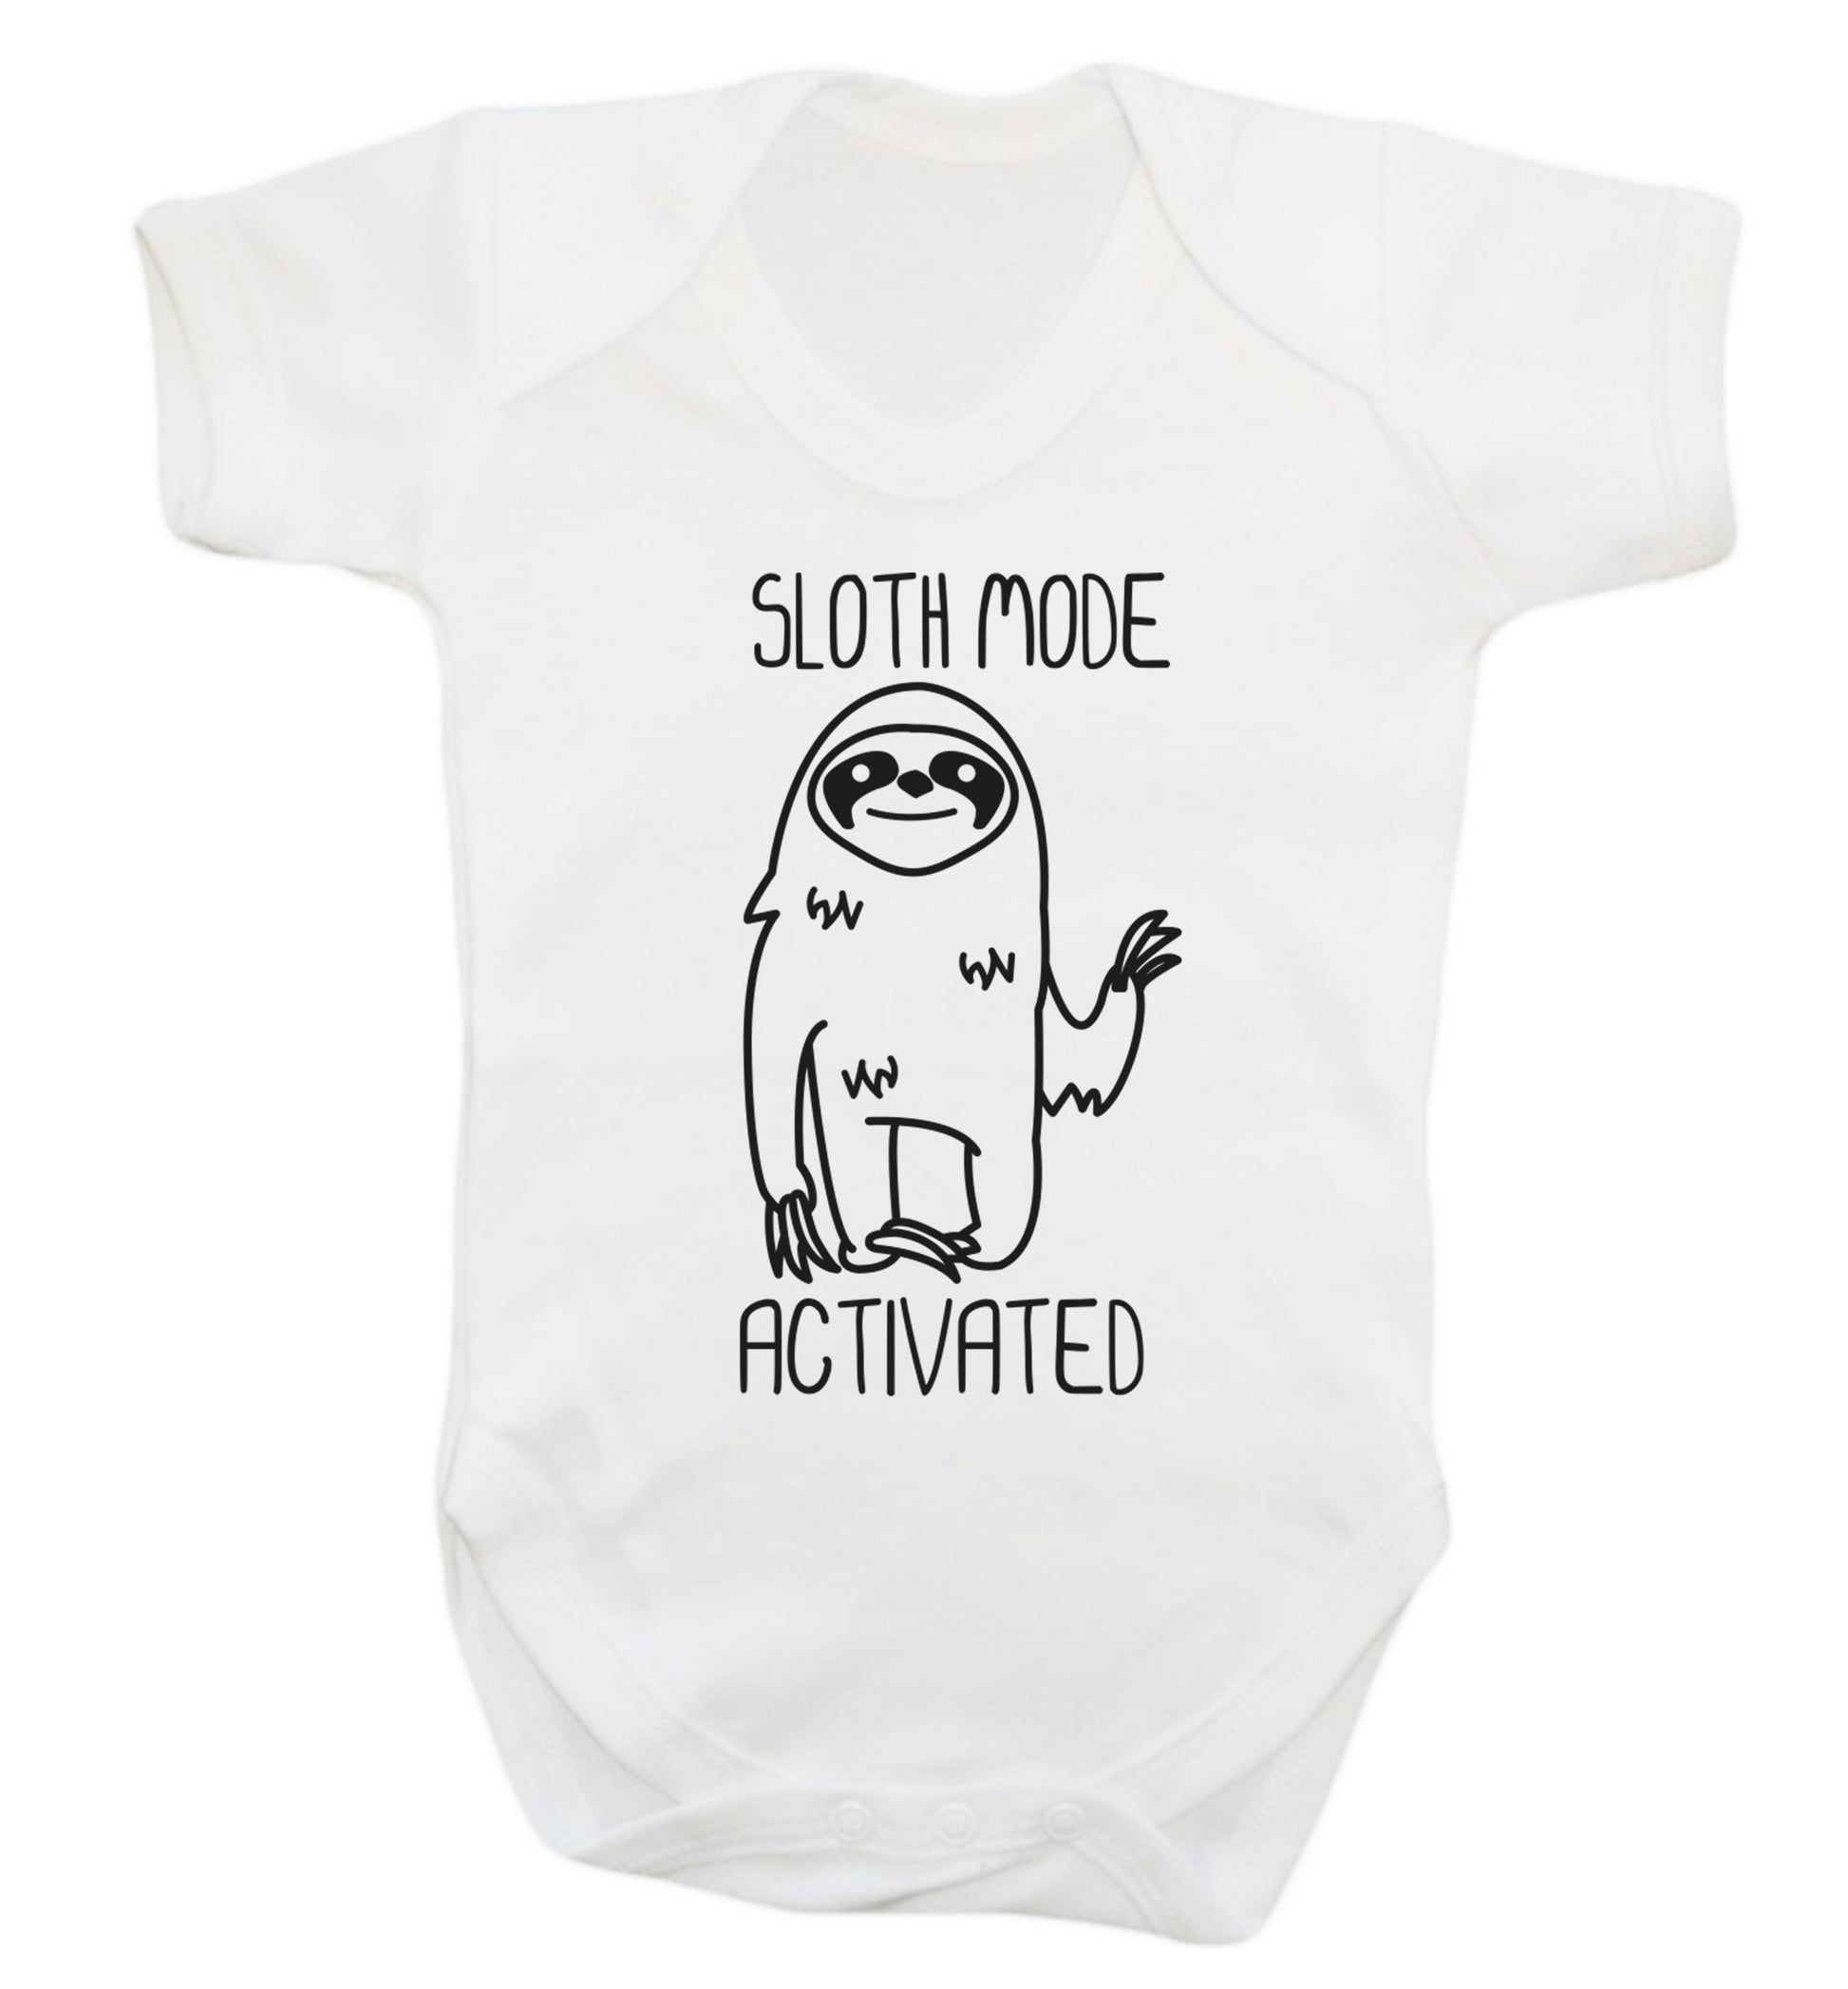 Sloth mode acitvated Baby Vest white 18-24 months